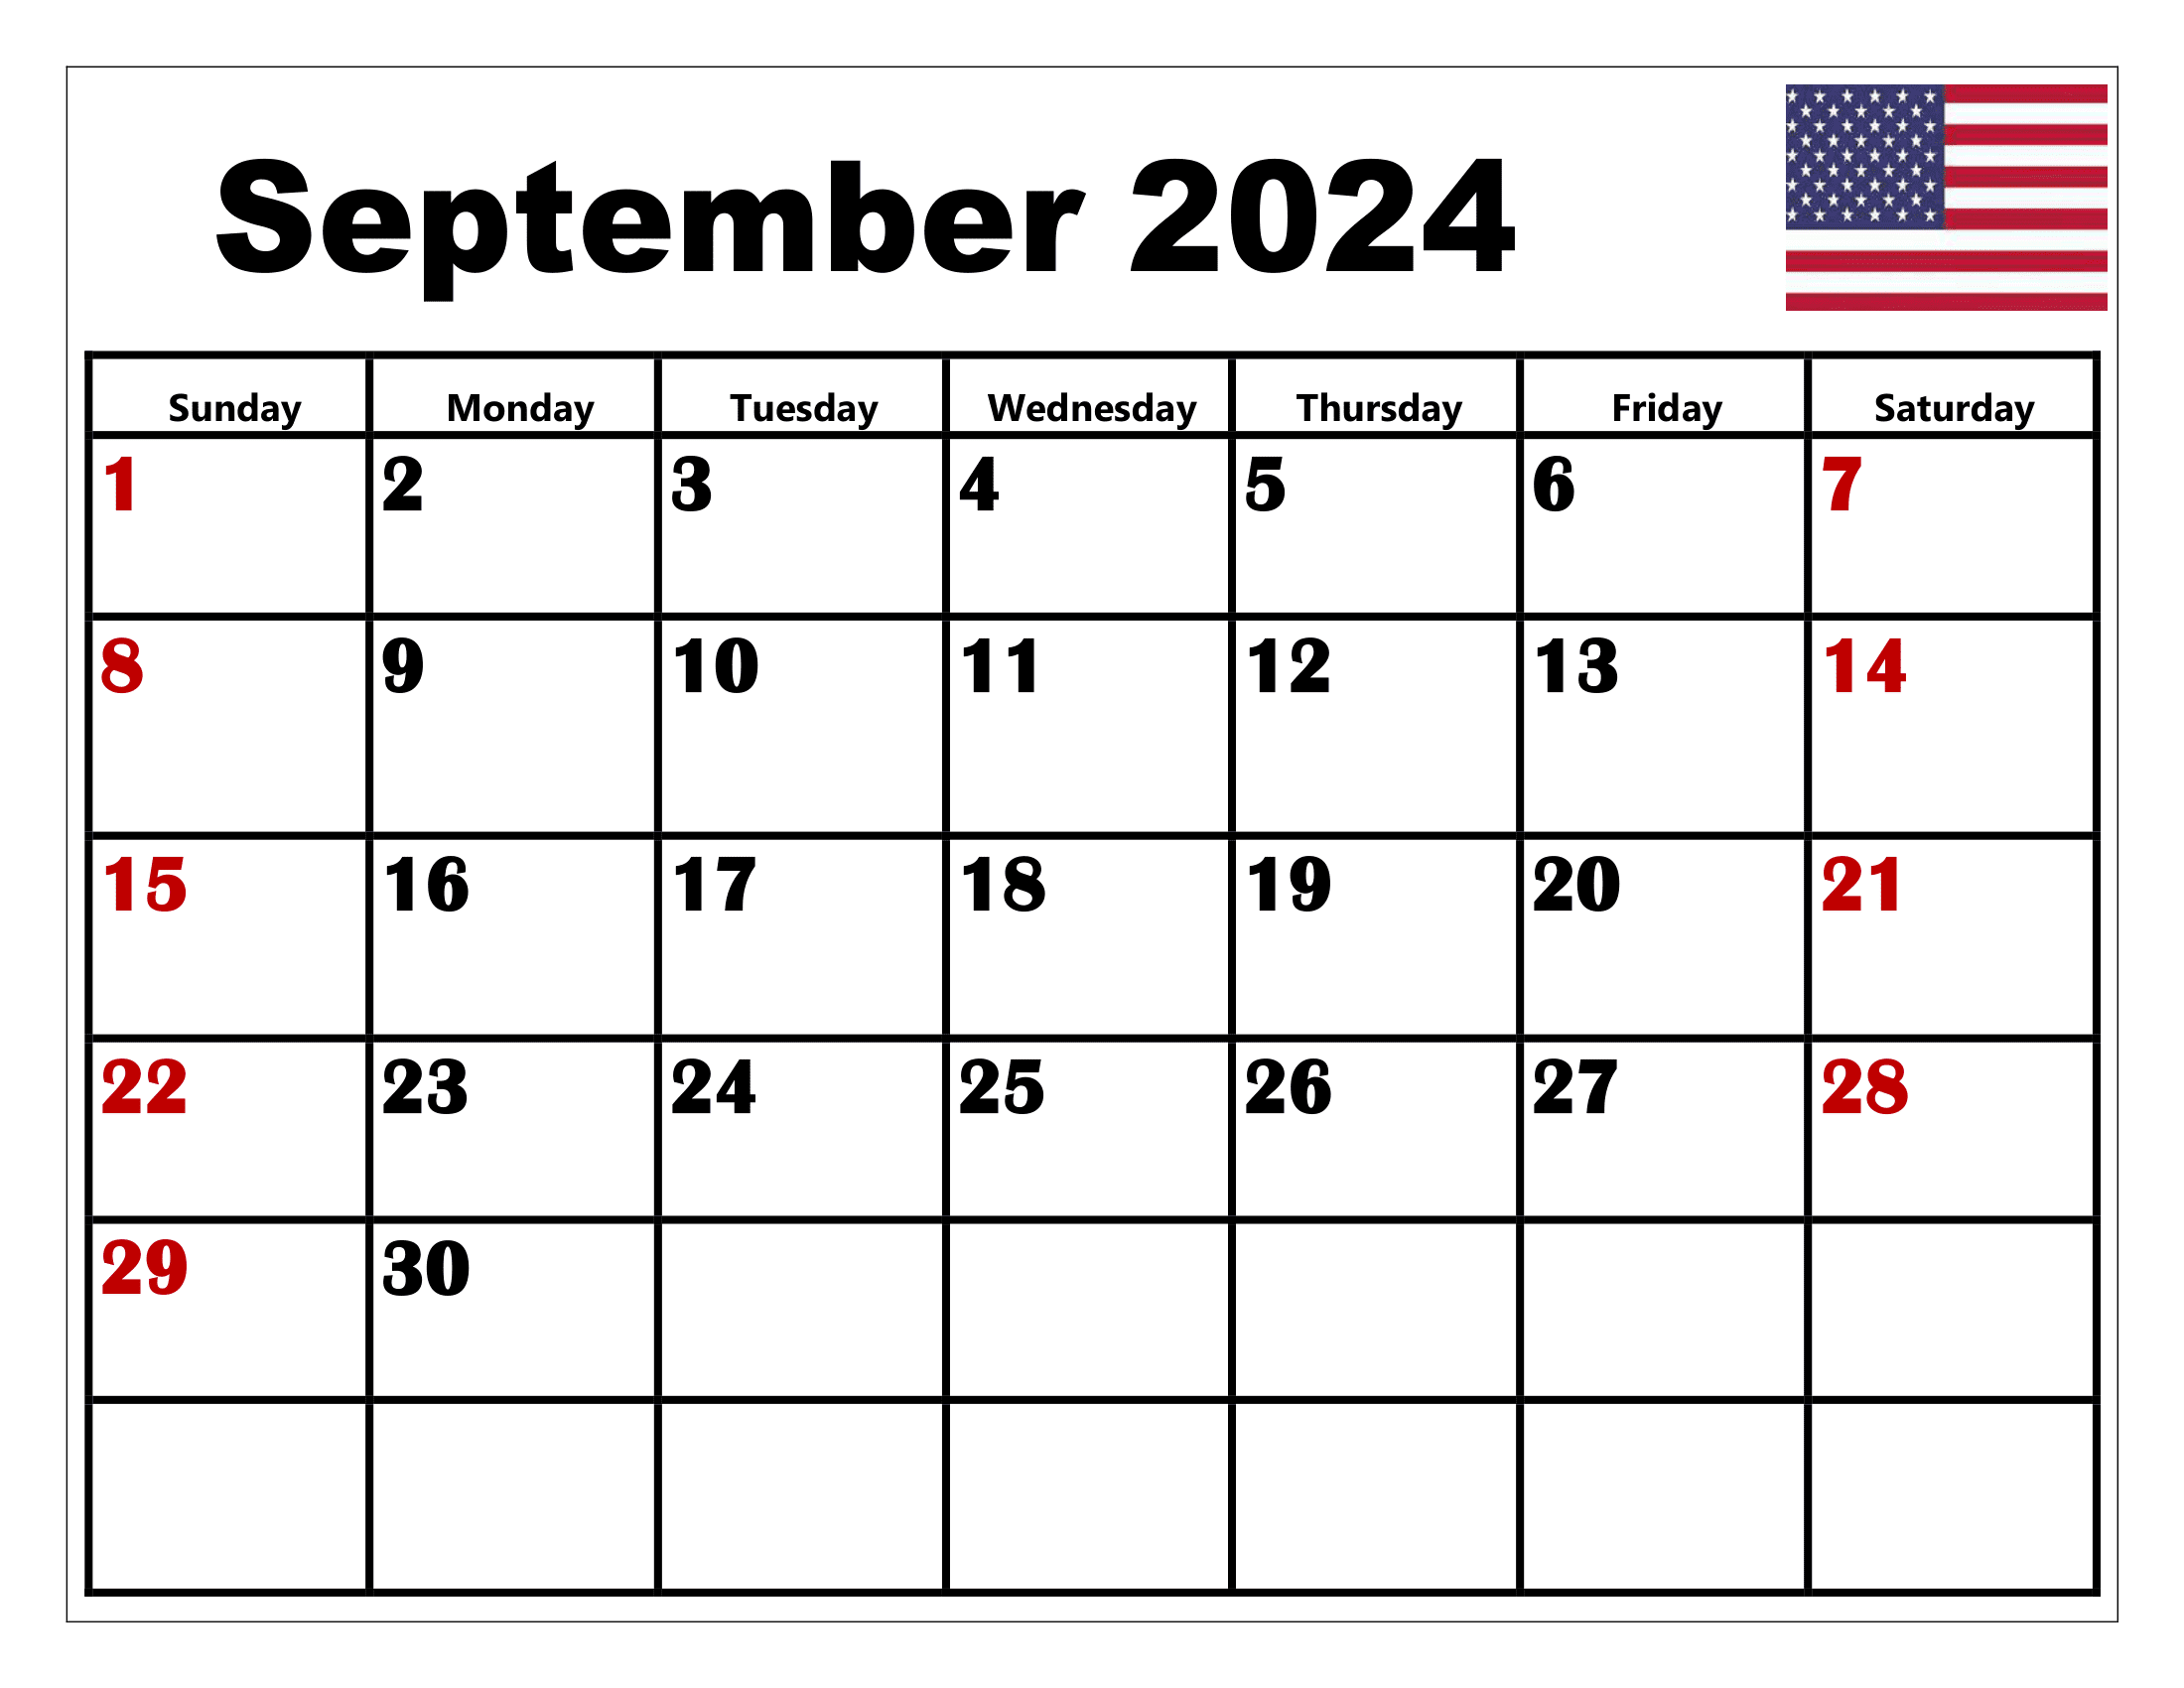 September 2024 Calendar Printable Pdf With Holidays for September 2024 Calendar Free Printable